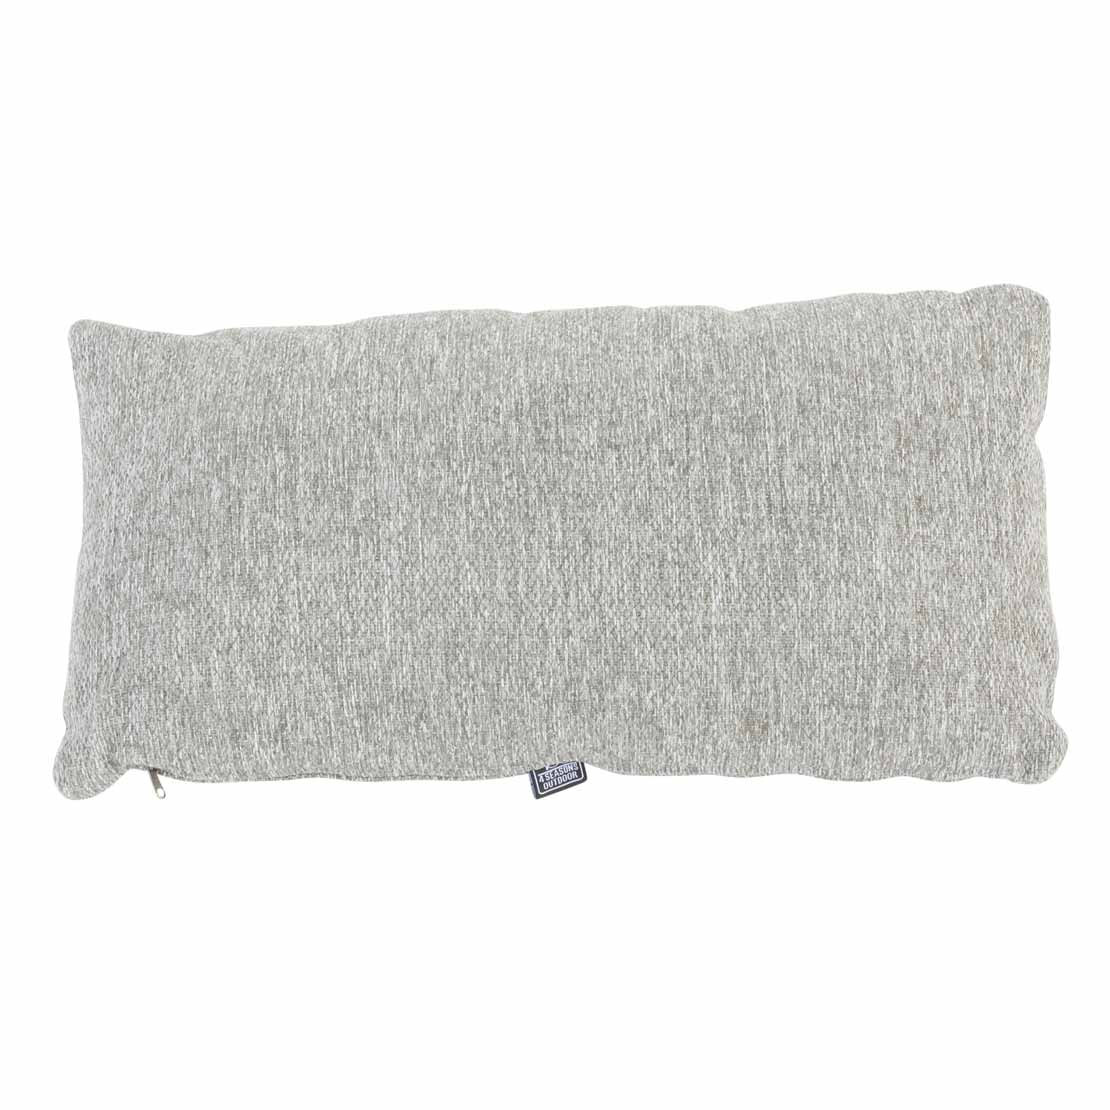 Pillow 30 x 60 cm Laconcha ash grey